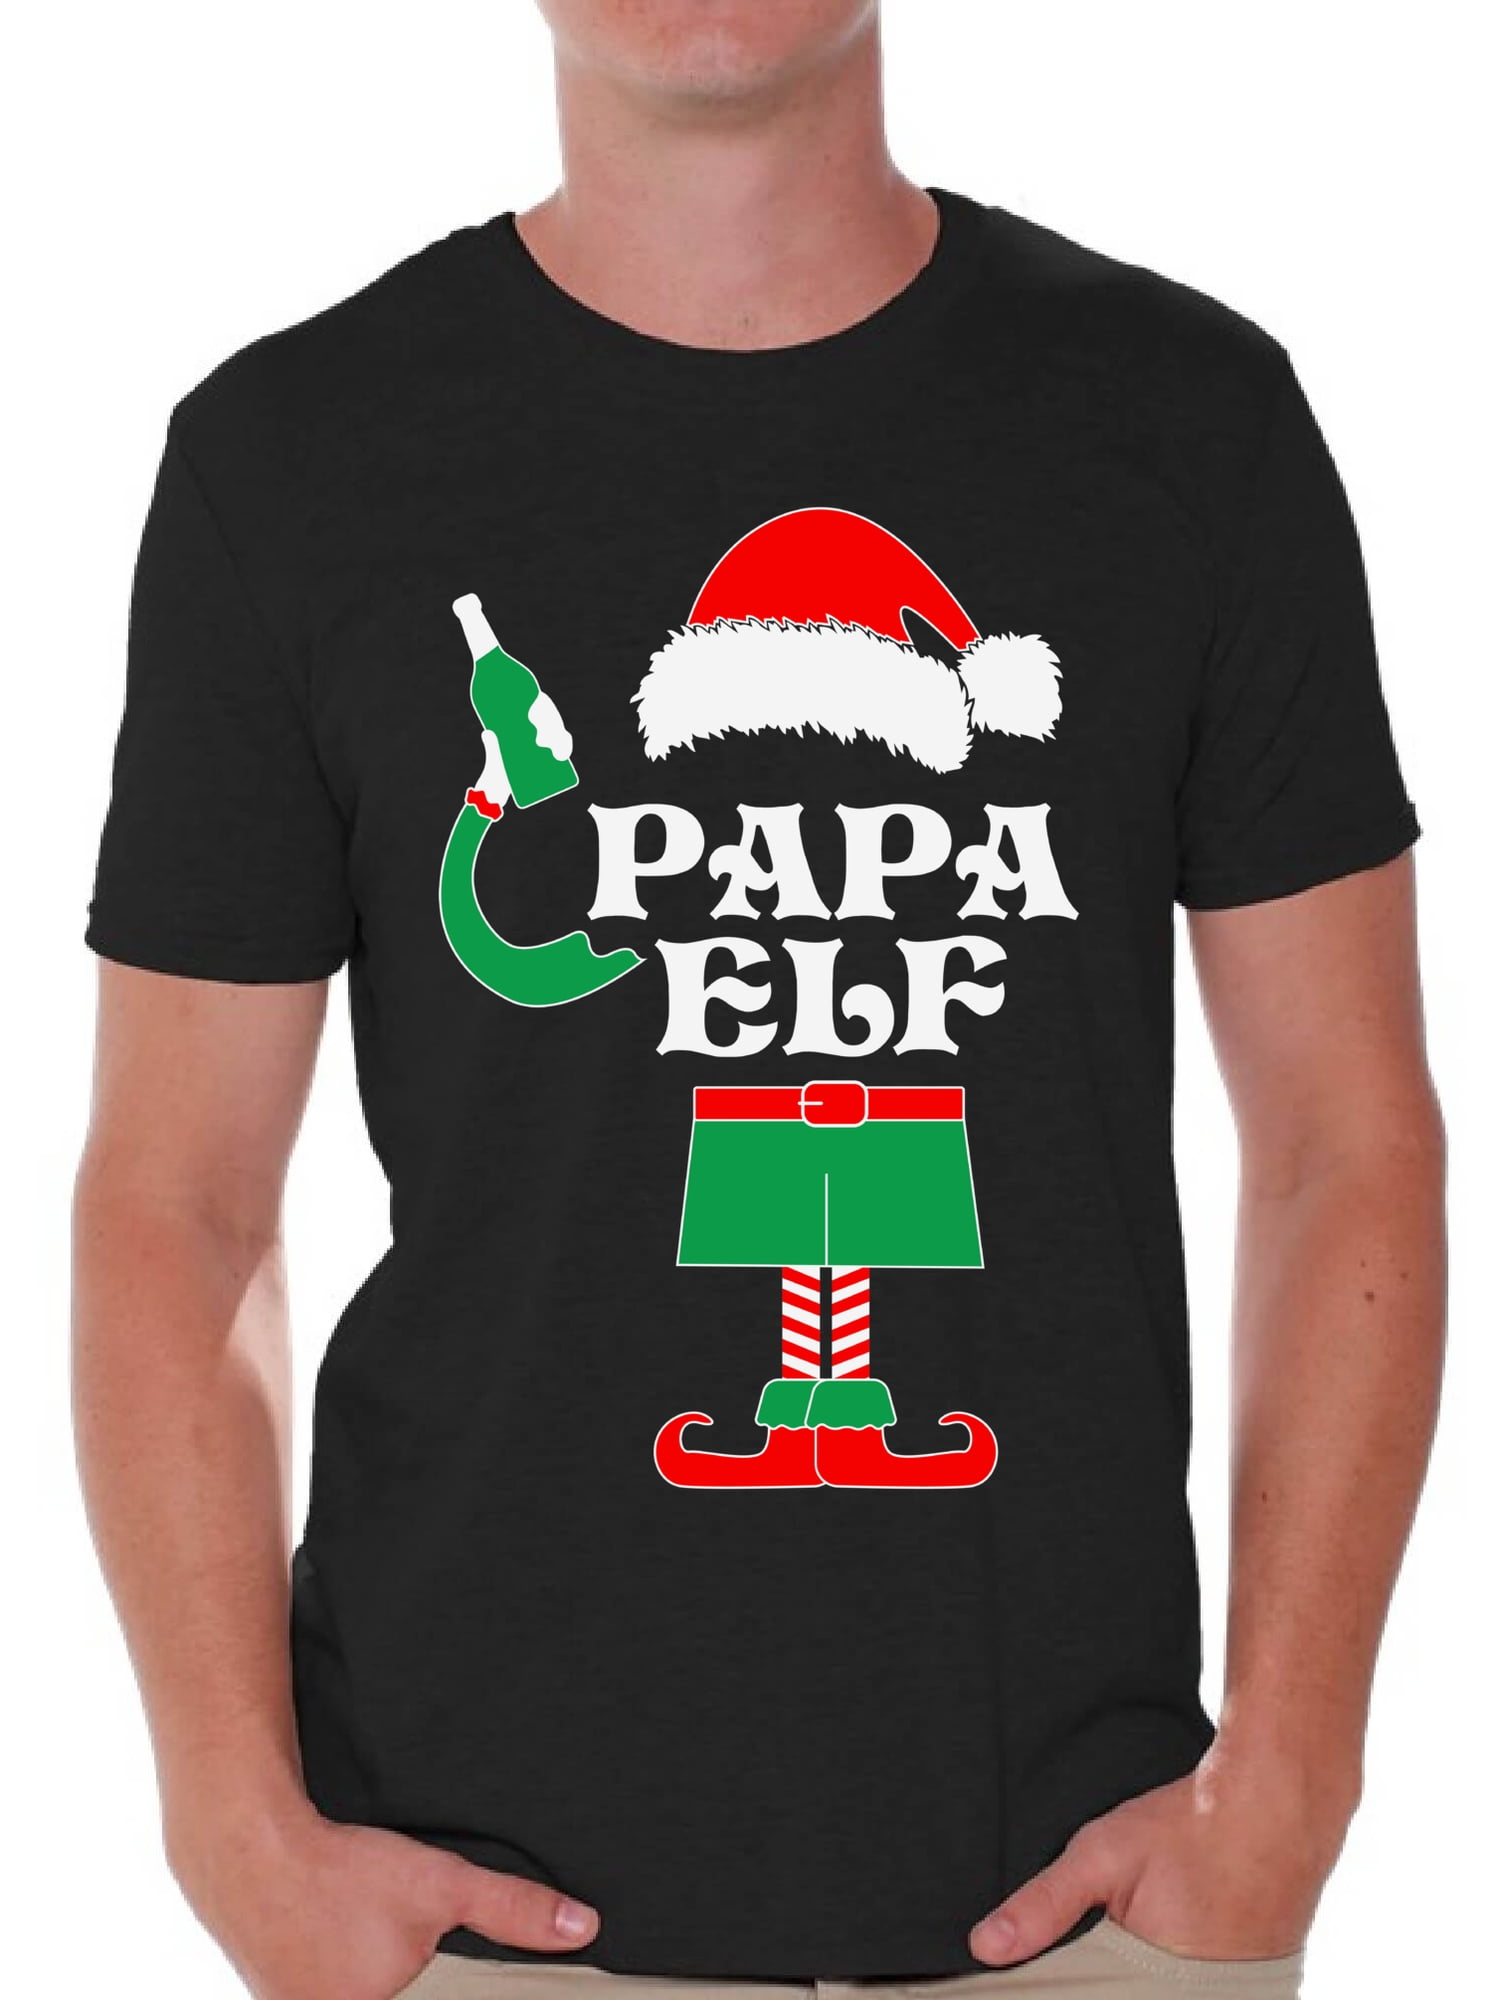 ALL Christmas Men/'s T-Shirt Holiday Santa Elf Costume Xmas Funny Ugly Tees